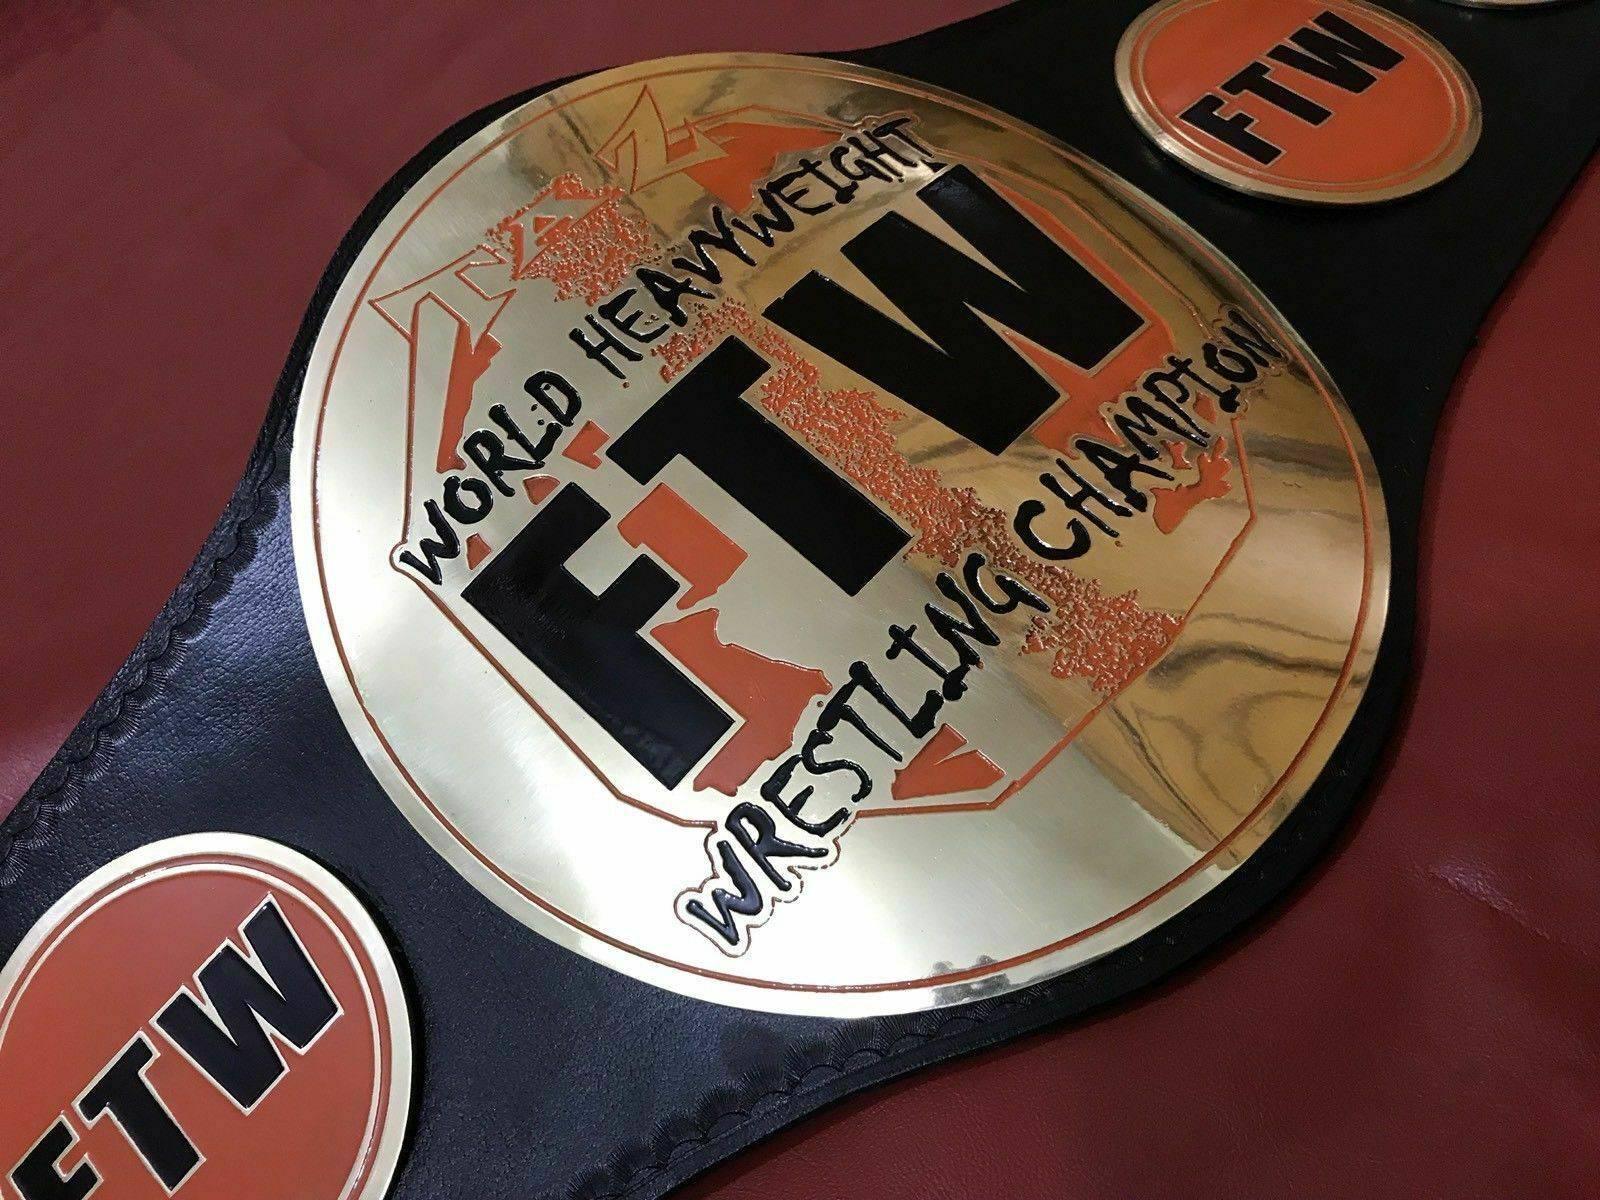 FTW Championship WORLD HEAVYWEIGHT Championship Belt - Zees Belts